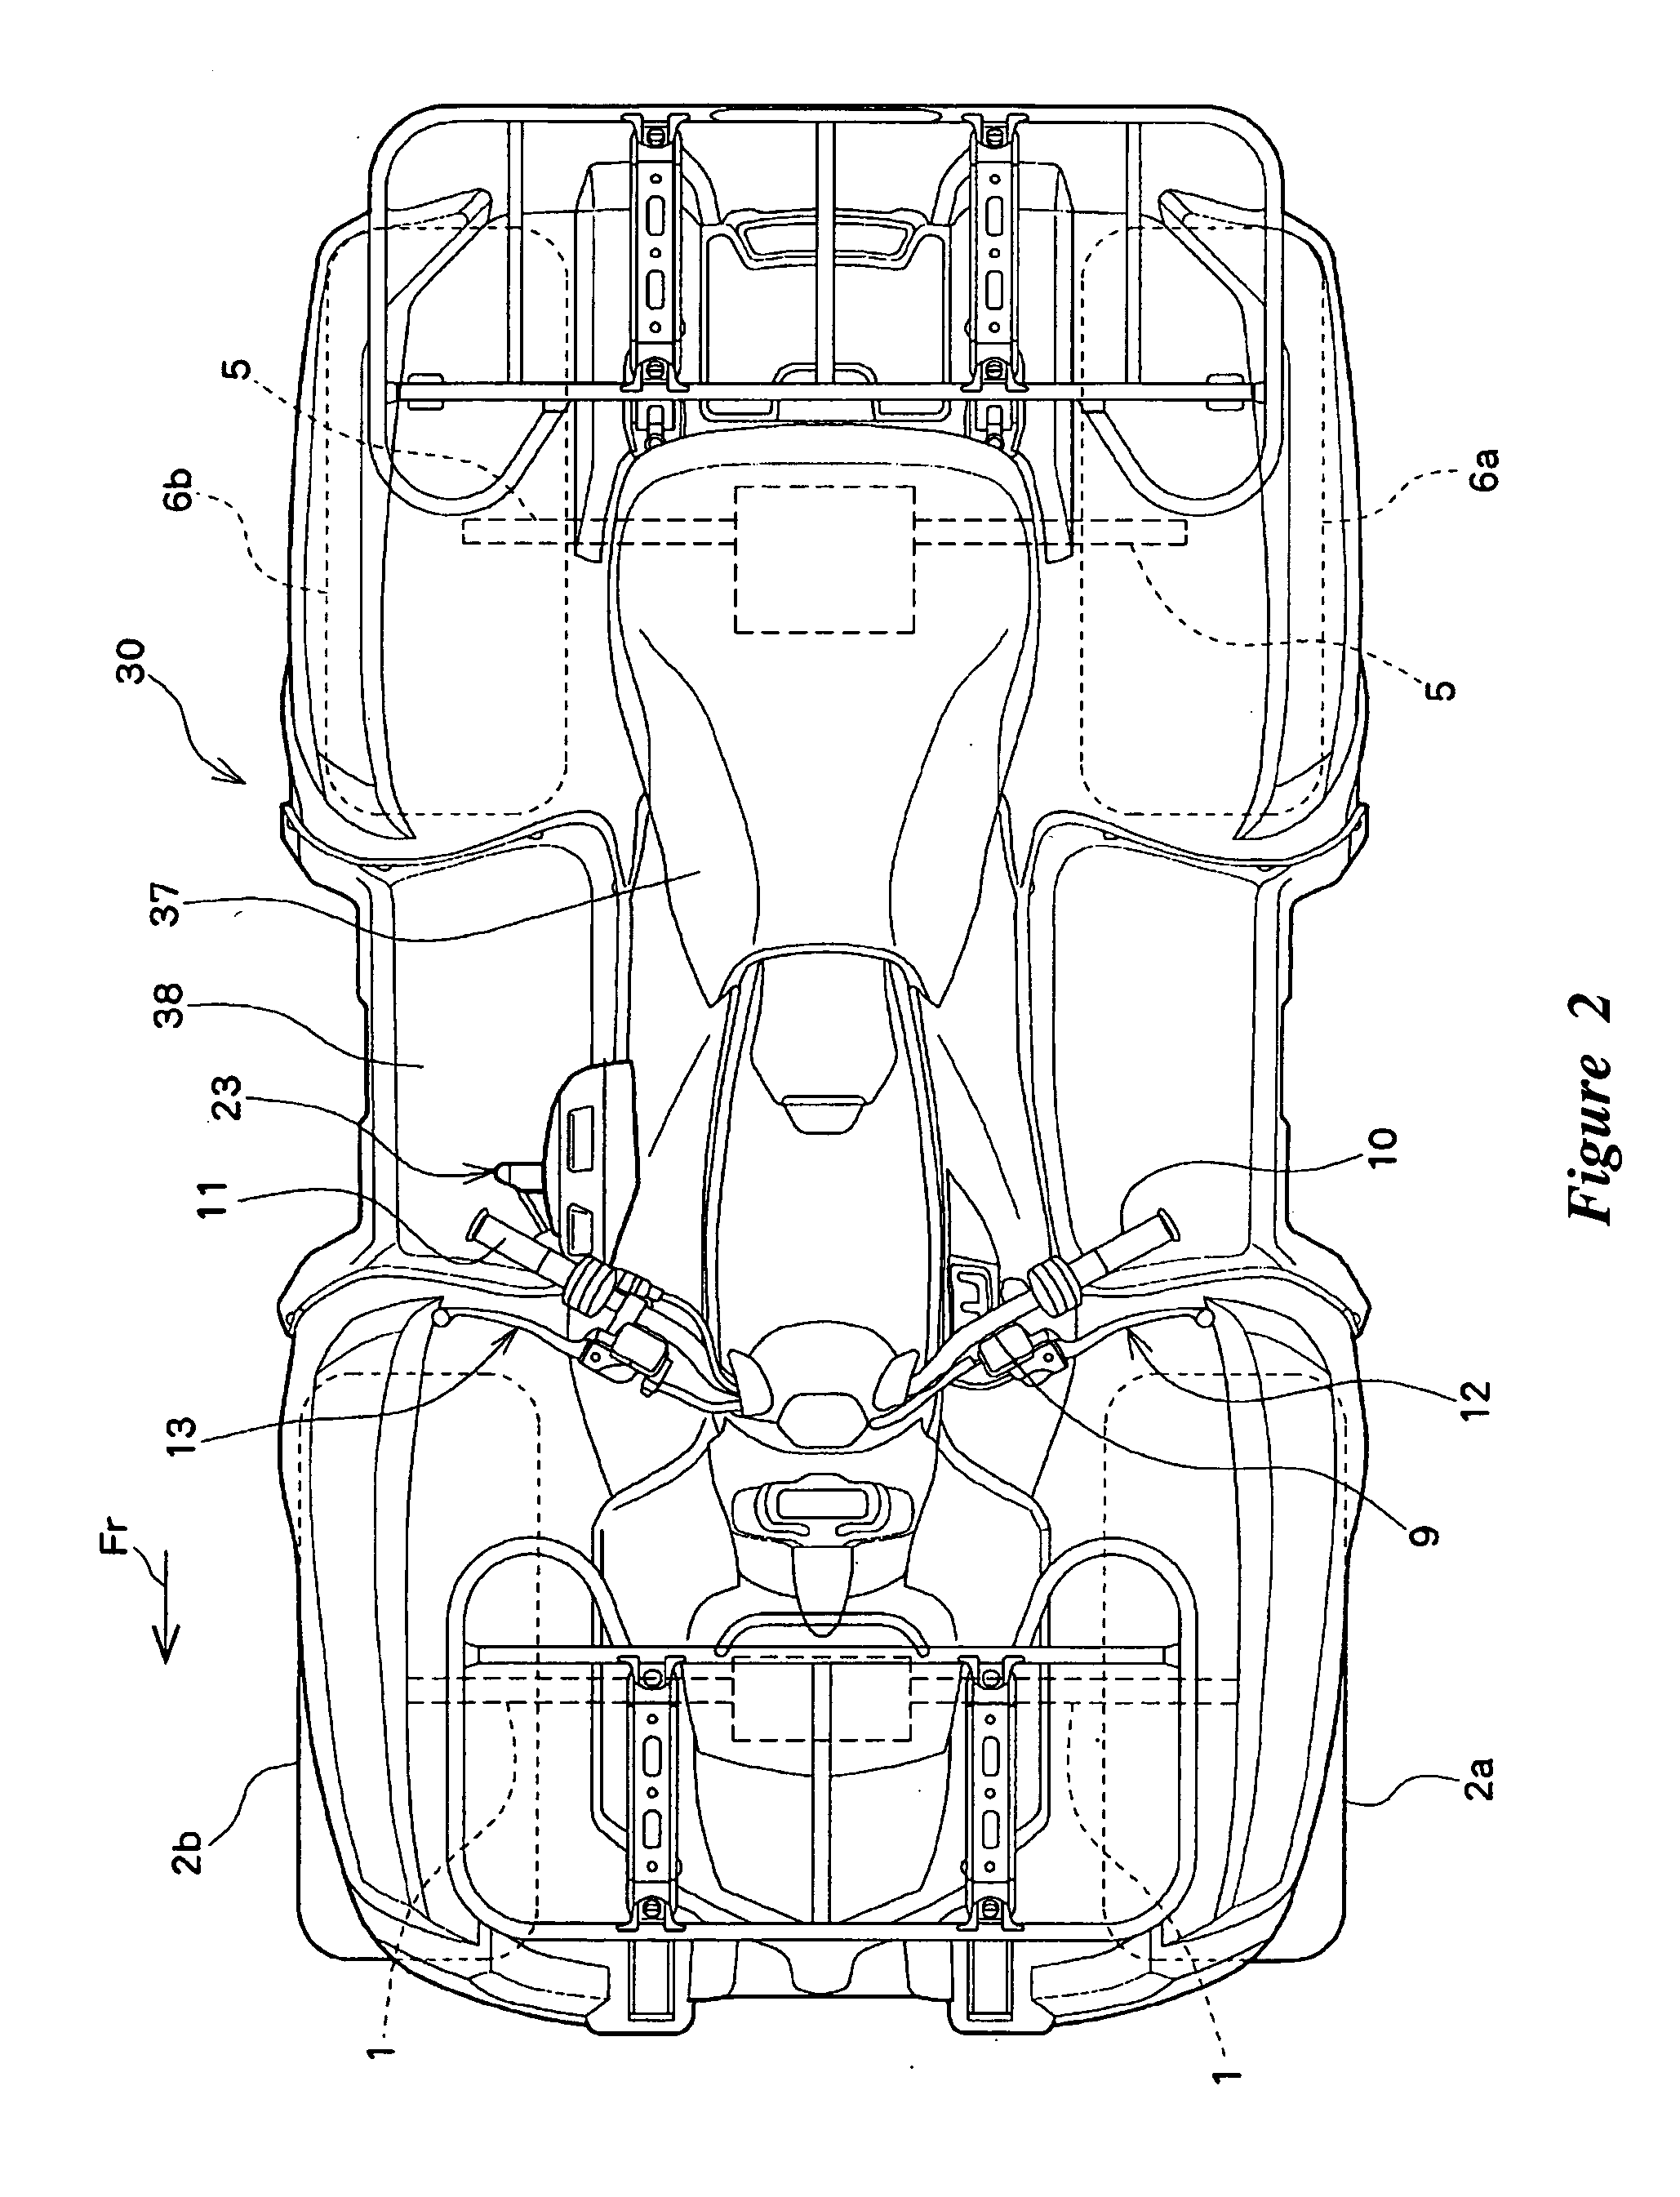 Brake system for straddle-type vehicle